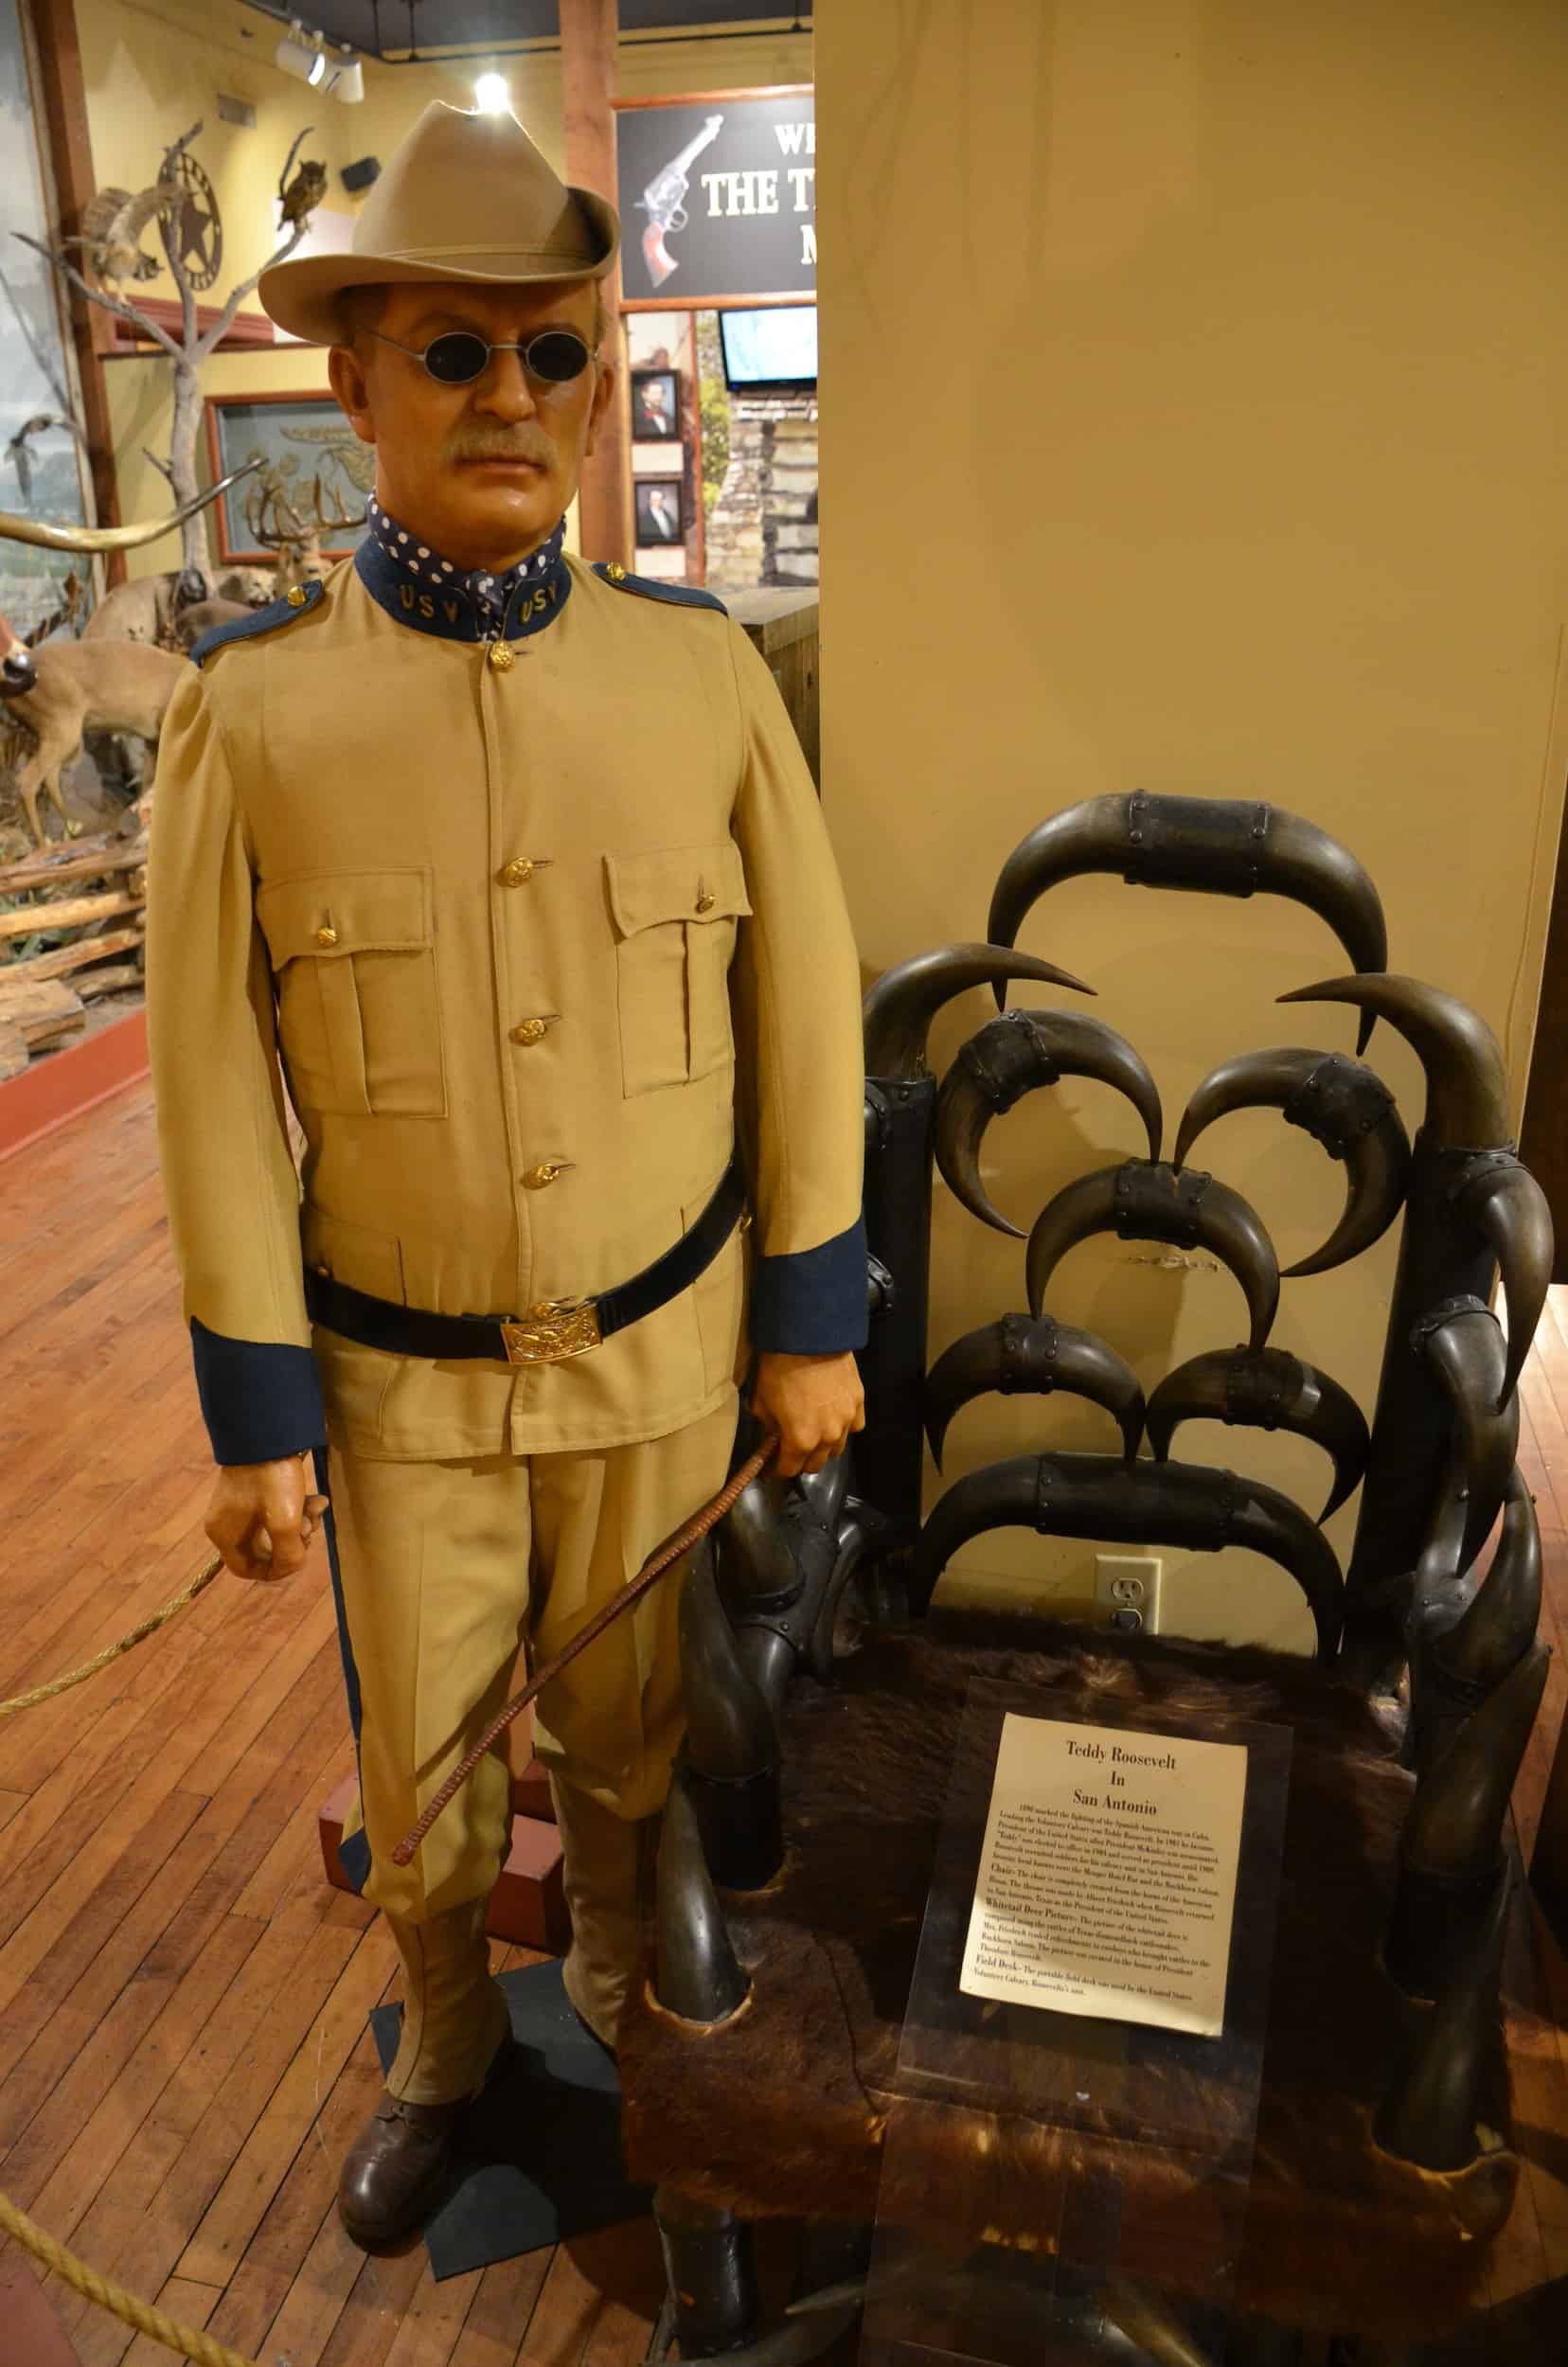 Teddy Roosevelt horn chair at the Buckhorn Museum in San Antonio, Texas